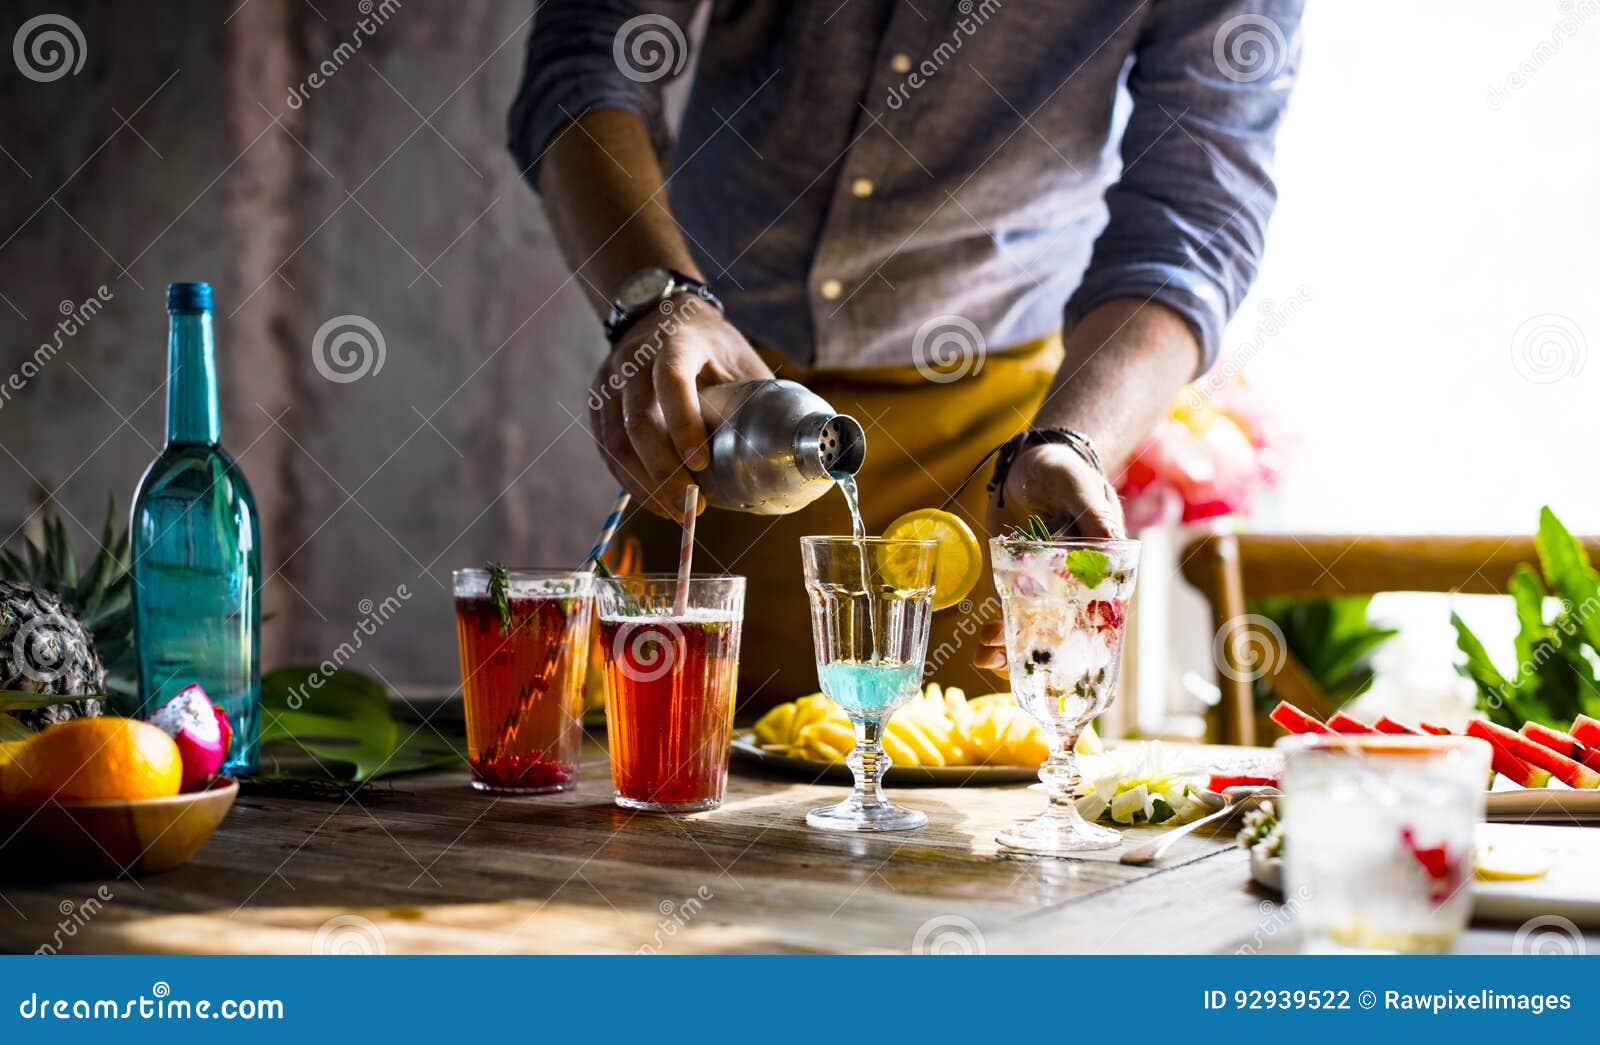 bartender guy working prepare cocktail skills